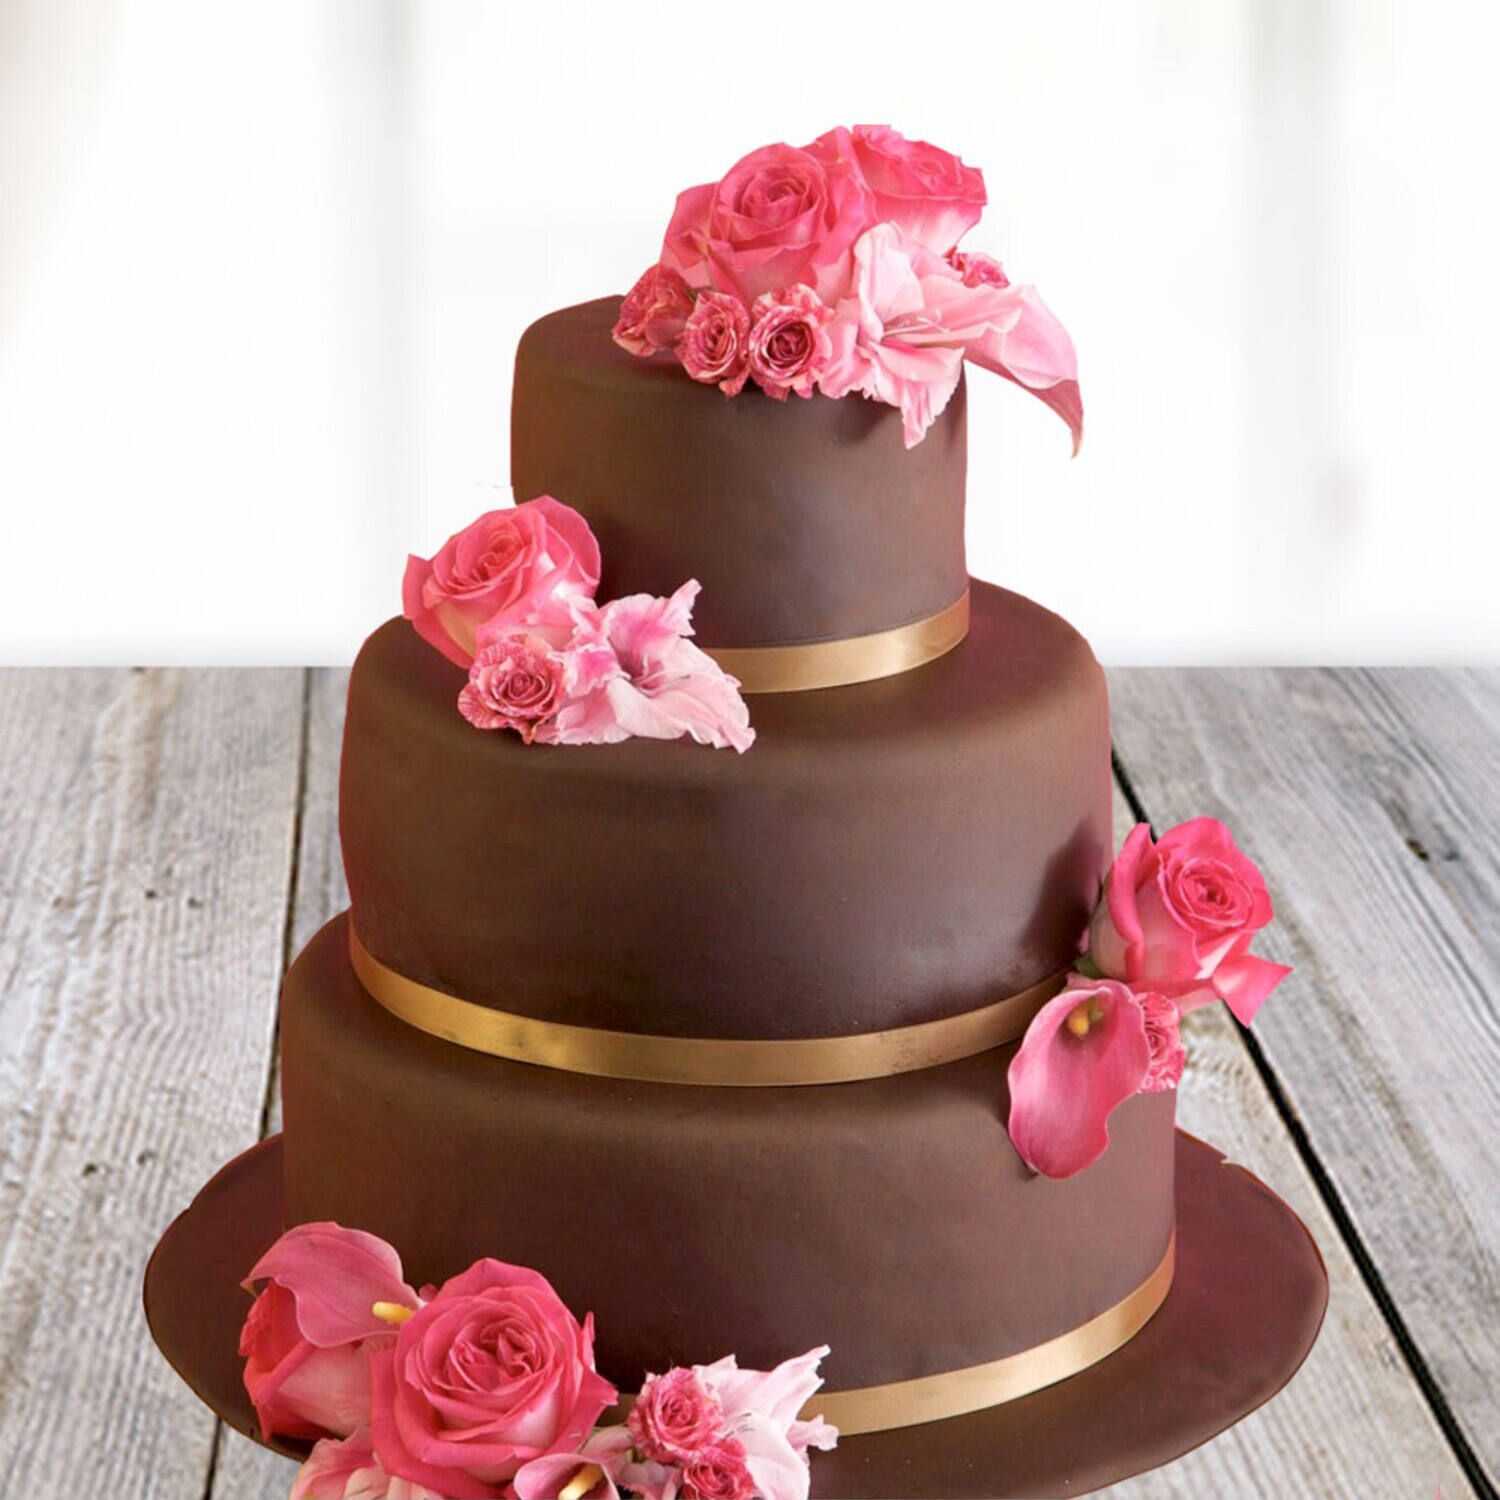 How to order on Winni – Winni – Cake & Flowers